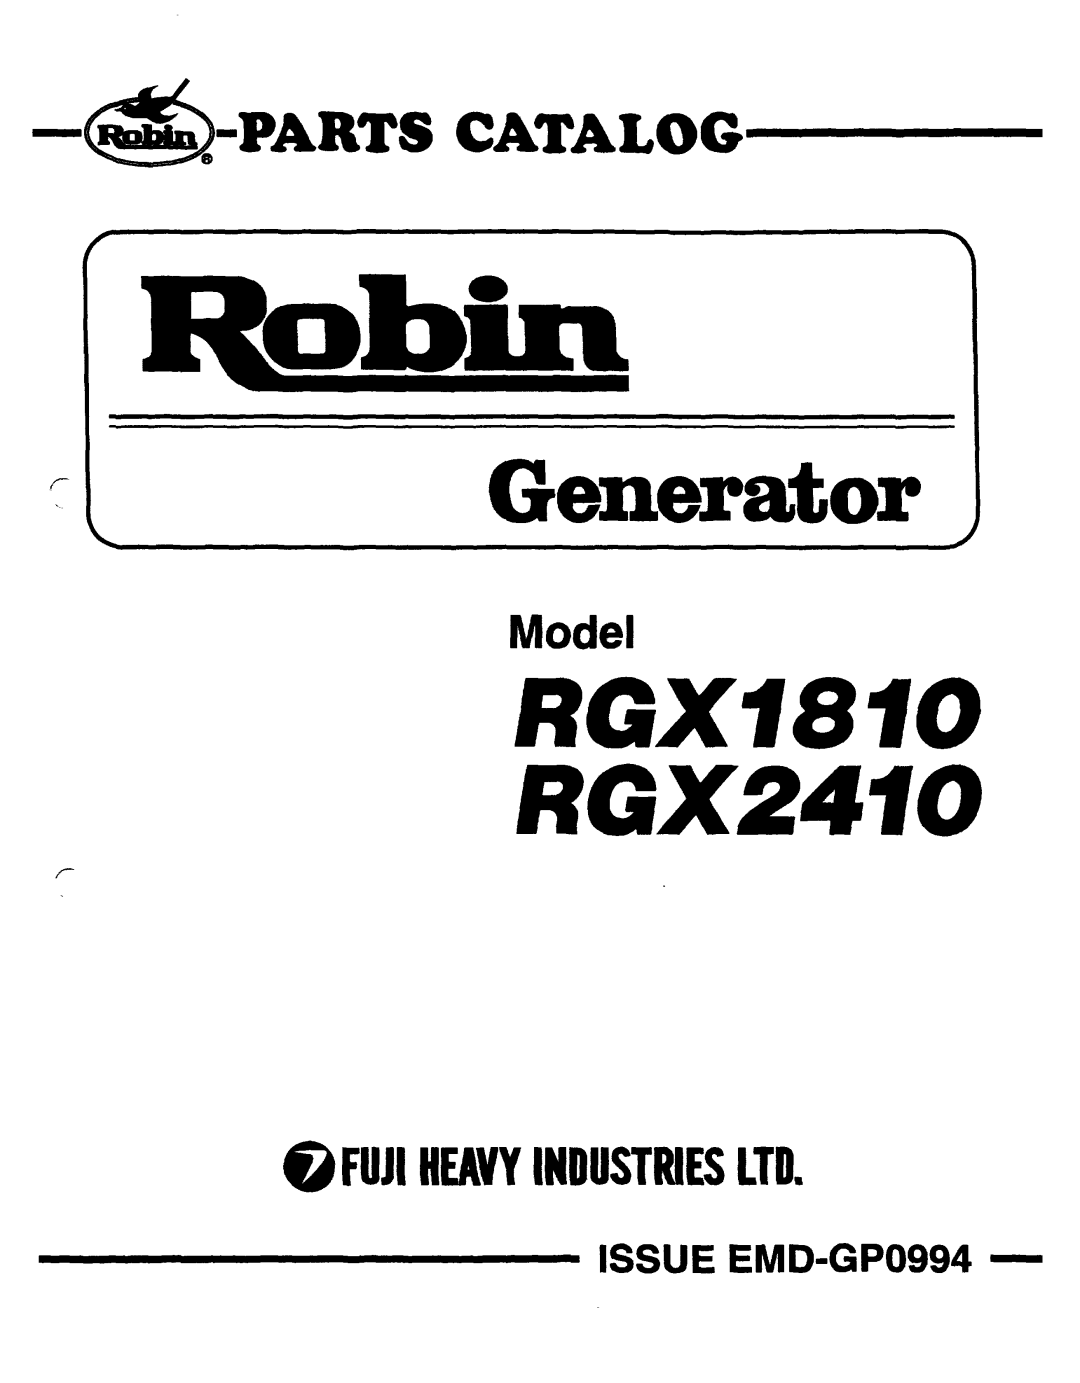 Subaru Robin Power Products RGX5510, RGXl810 manual Model, RGXY810 RGX2410, Generator, Partscatalog, ISSUE EMD-GPO994 